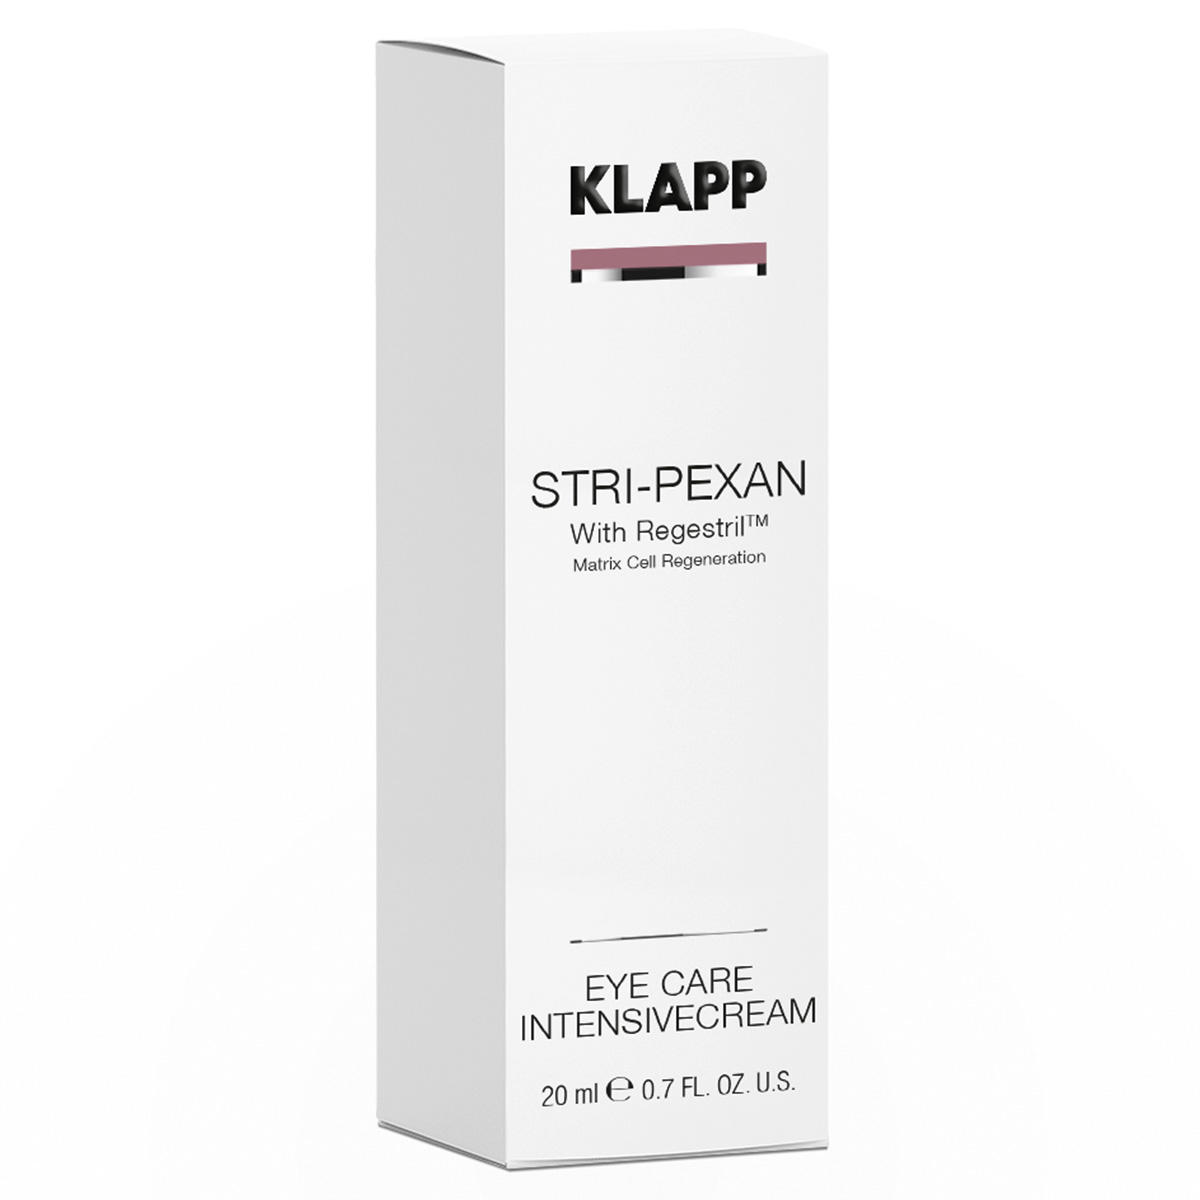 KLAPP STRI-PEXAN Eye Care Intensivecream 20 ml - 2